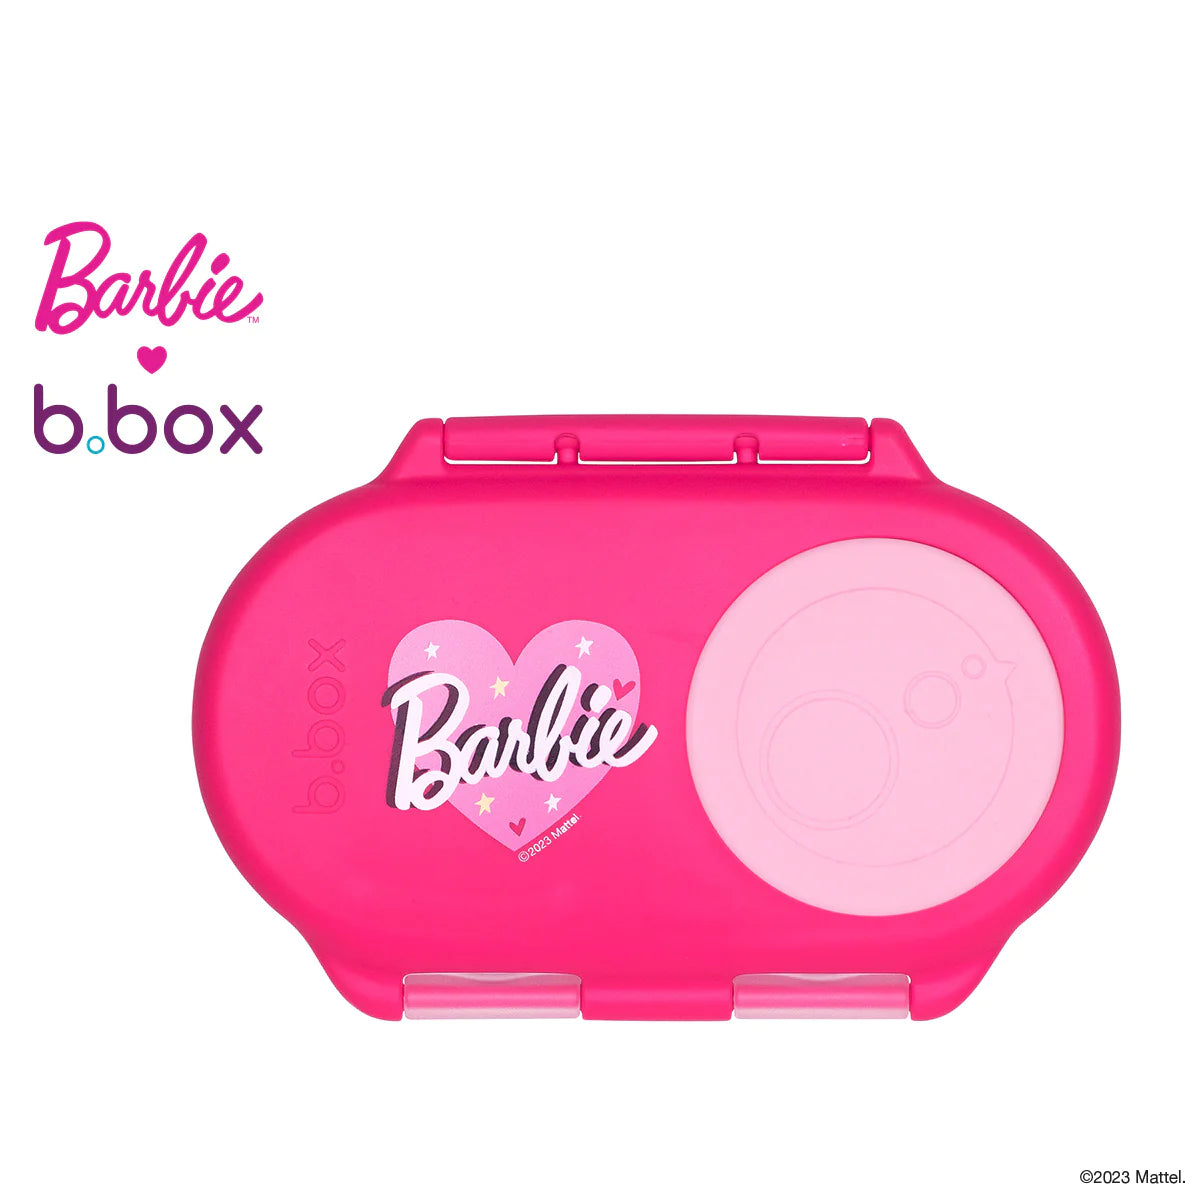 b.box Ultimate Package Large - Barbie